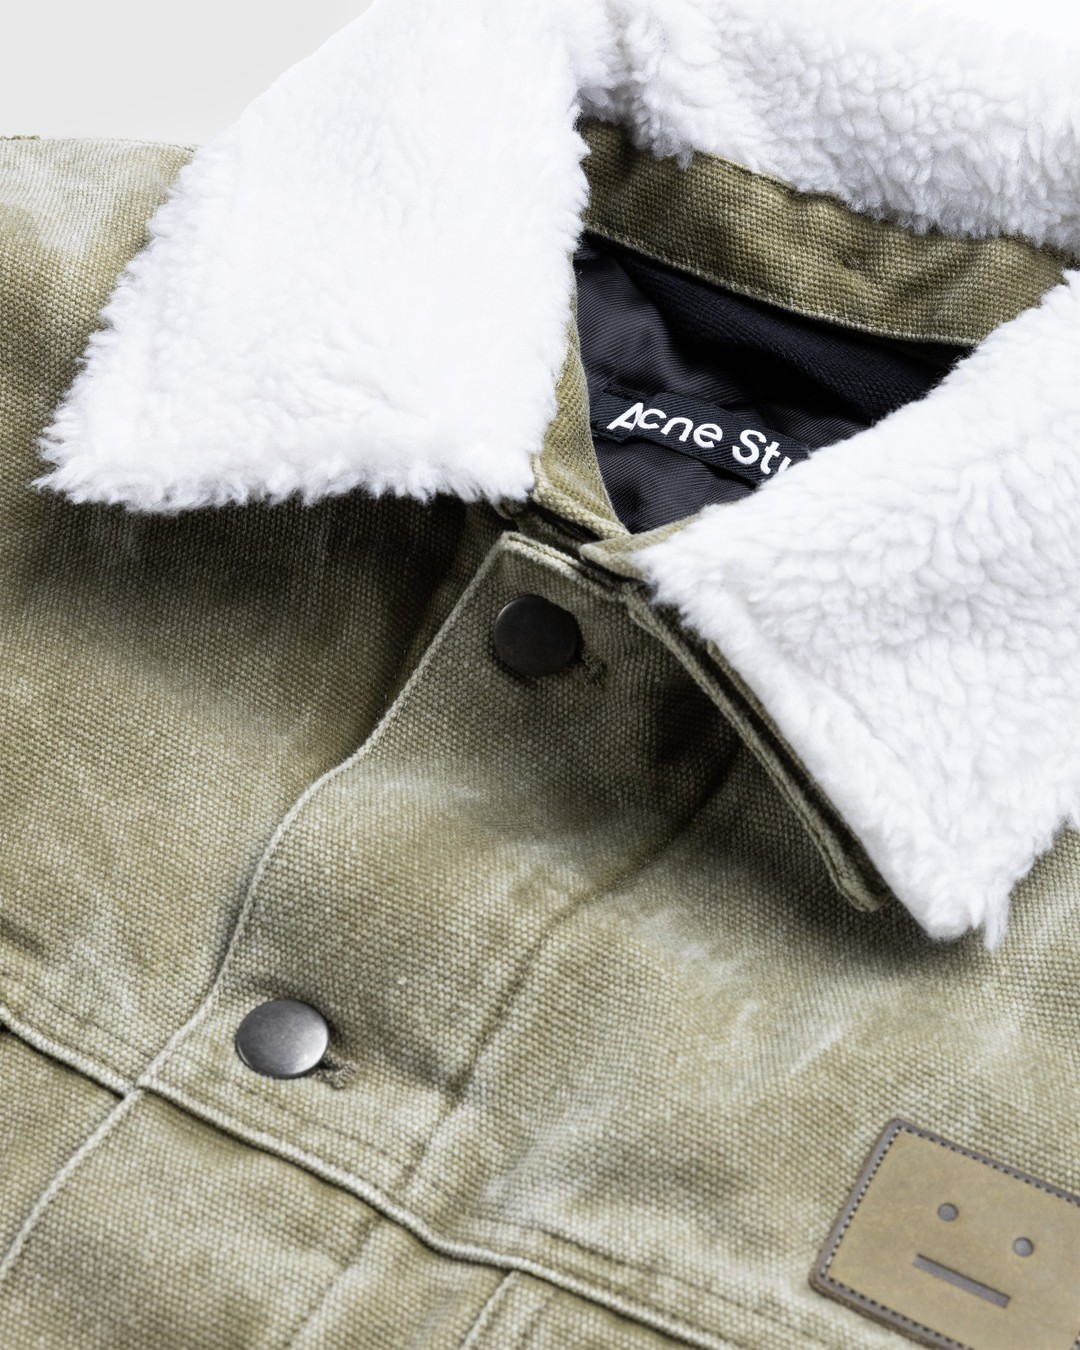 Acne Studios – Canvas Padded Jacket Khaki Beige - Outerwear - Green - Image 5